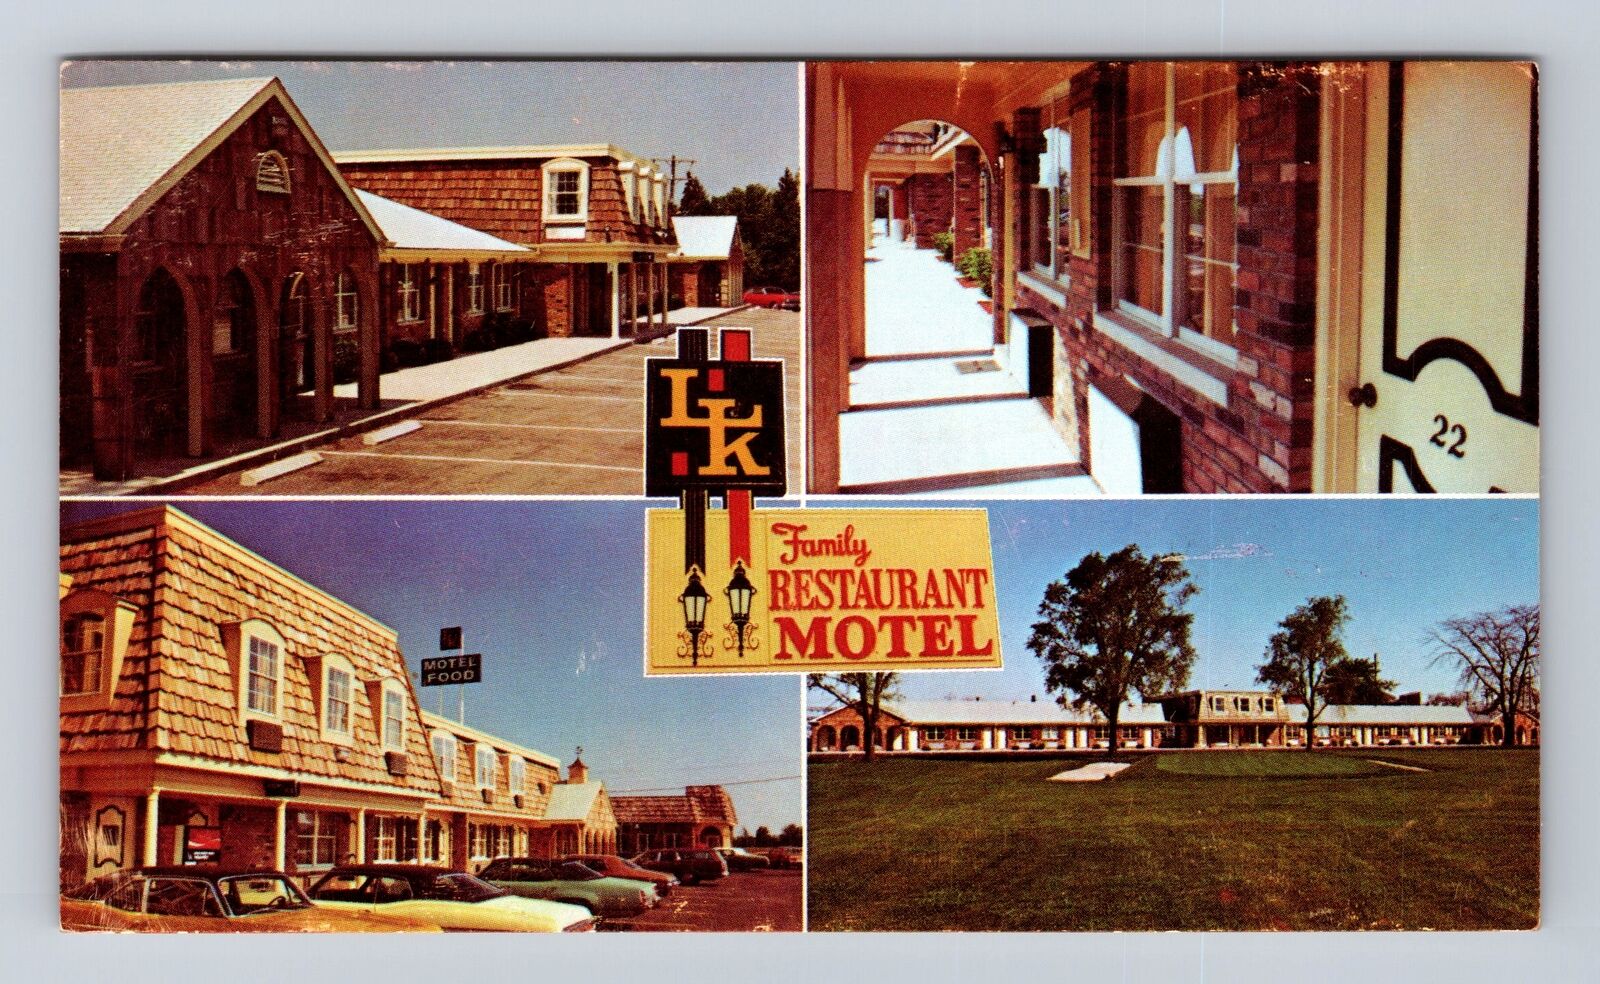 Delaware OH-Ohio, L K Motel Advertising, Vintage Souvenir Postcard